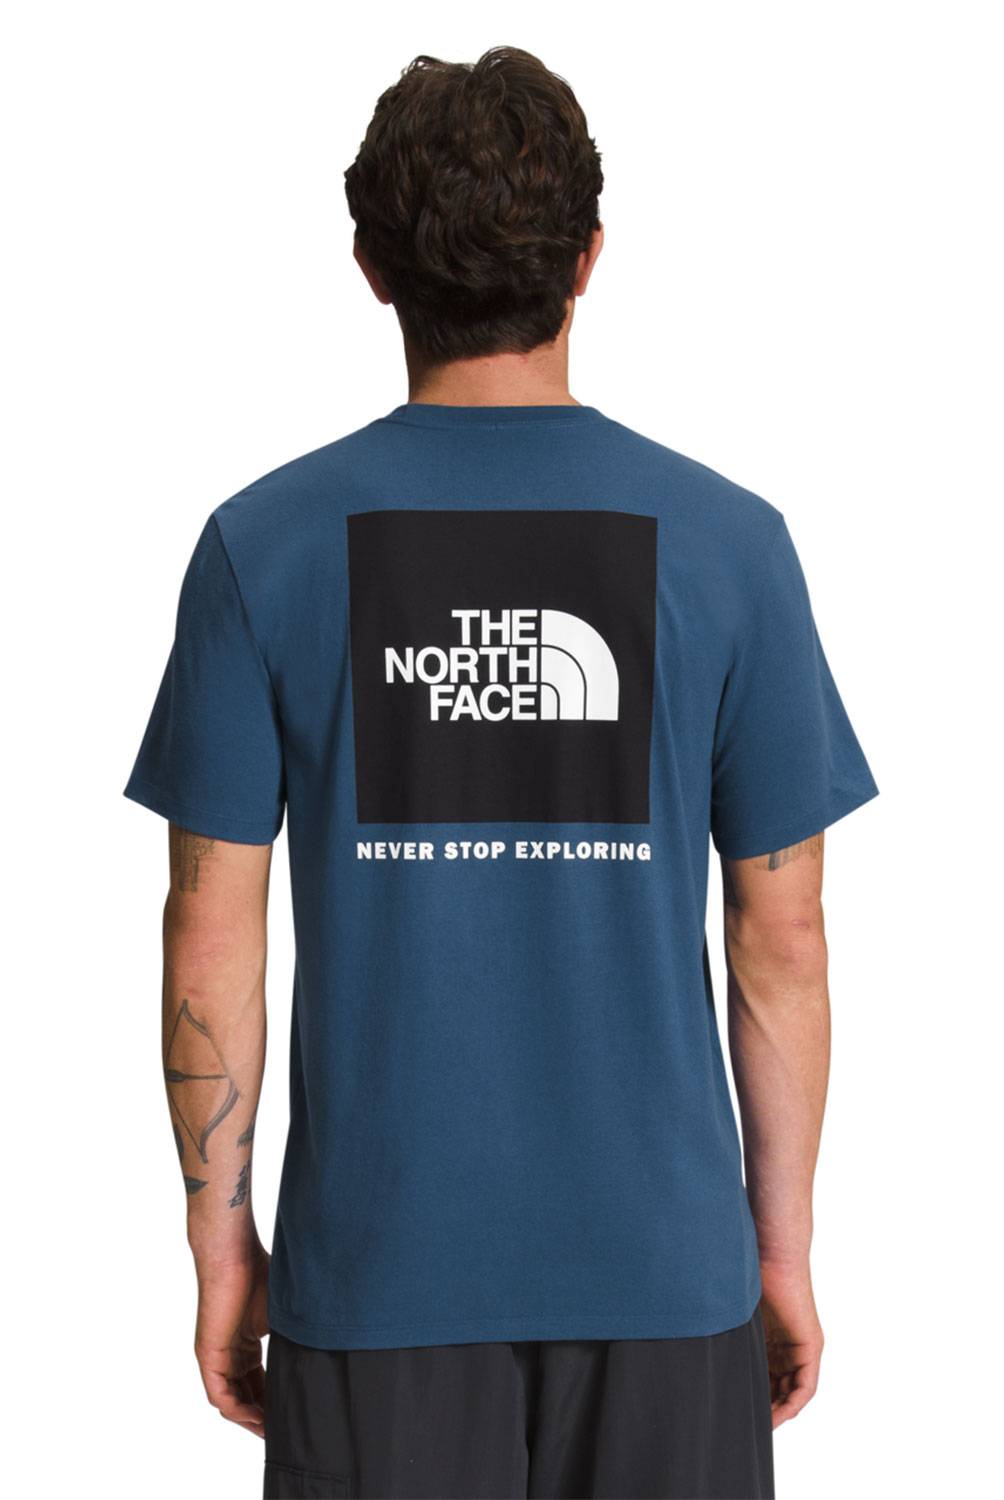 THE NORTH FACE - Polera Manga Corta Hombre The North Face